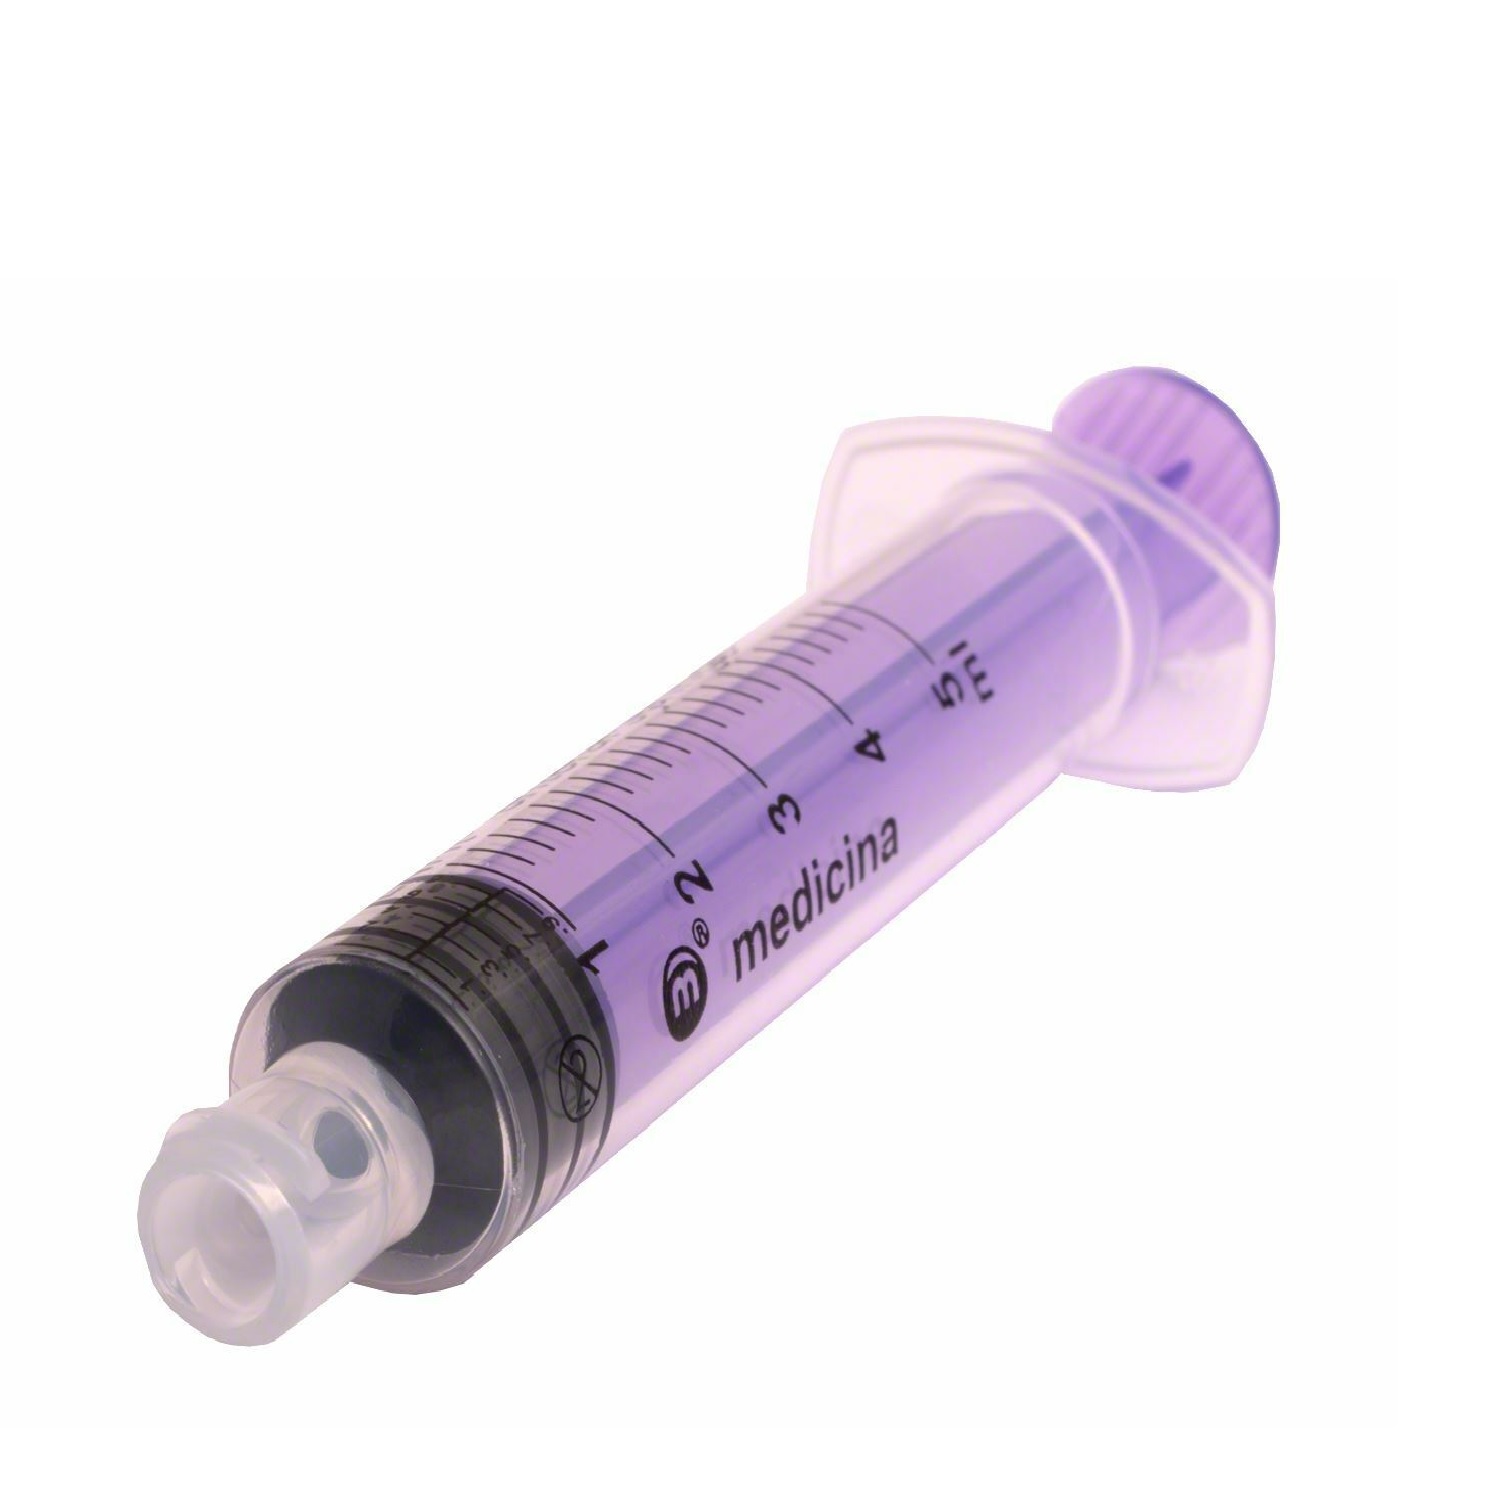 Medicina Enteral Luer-Lock Syringe with ENFIT connector - 5ml x 100